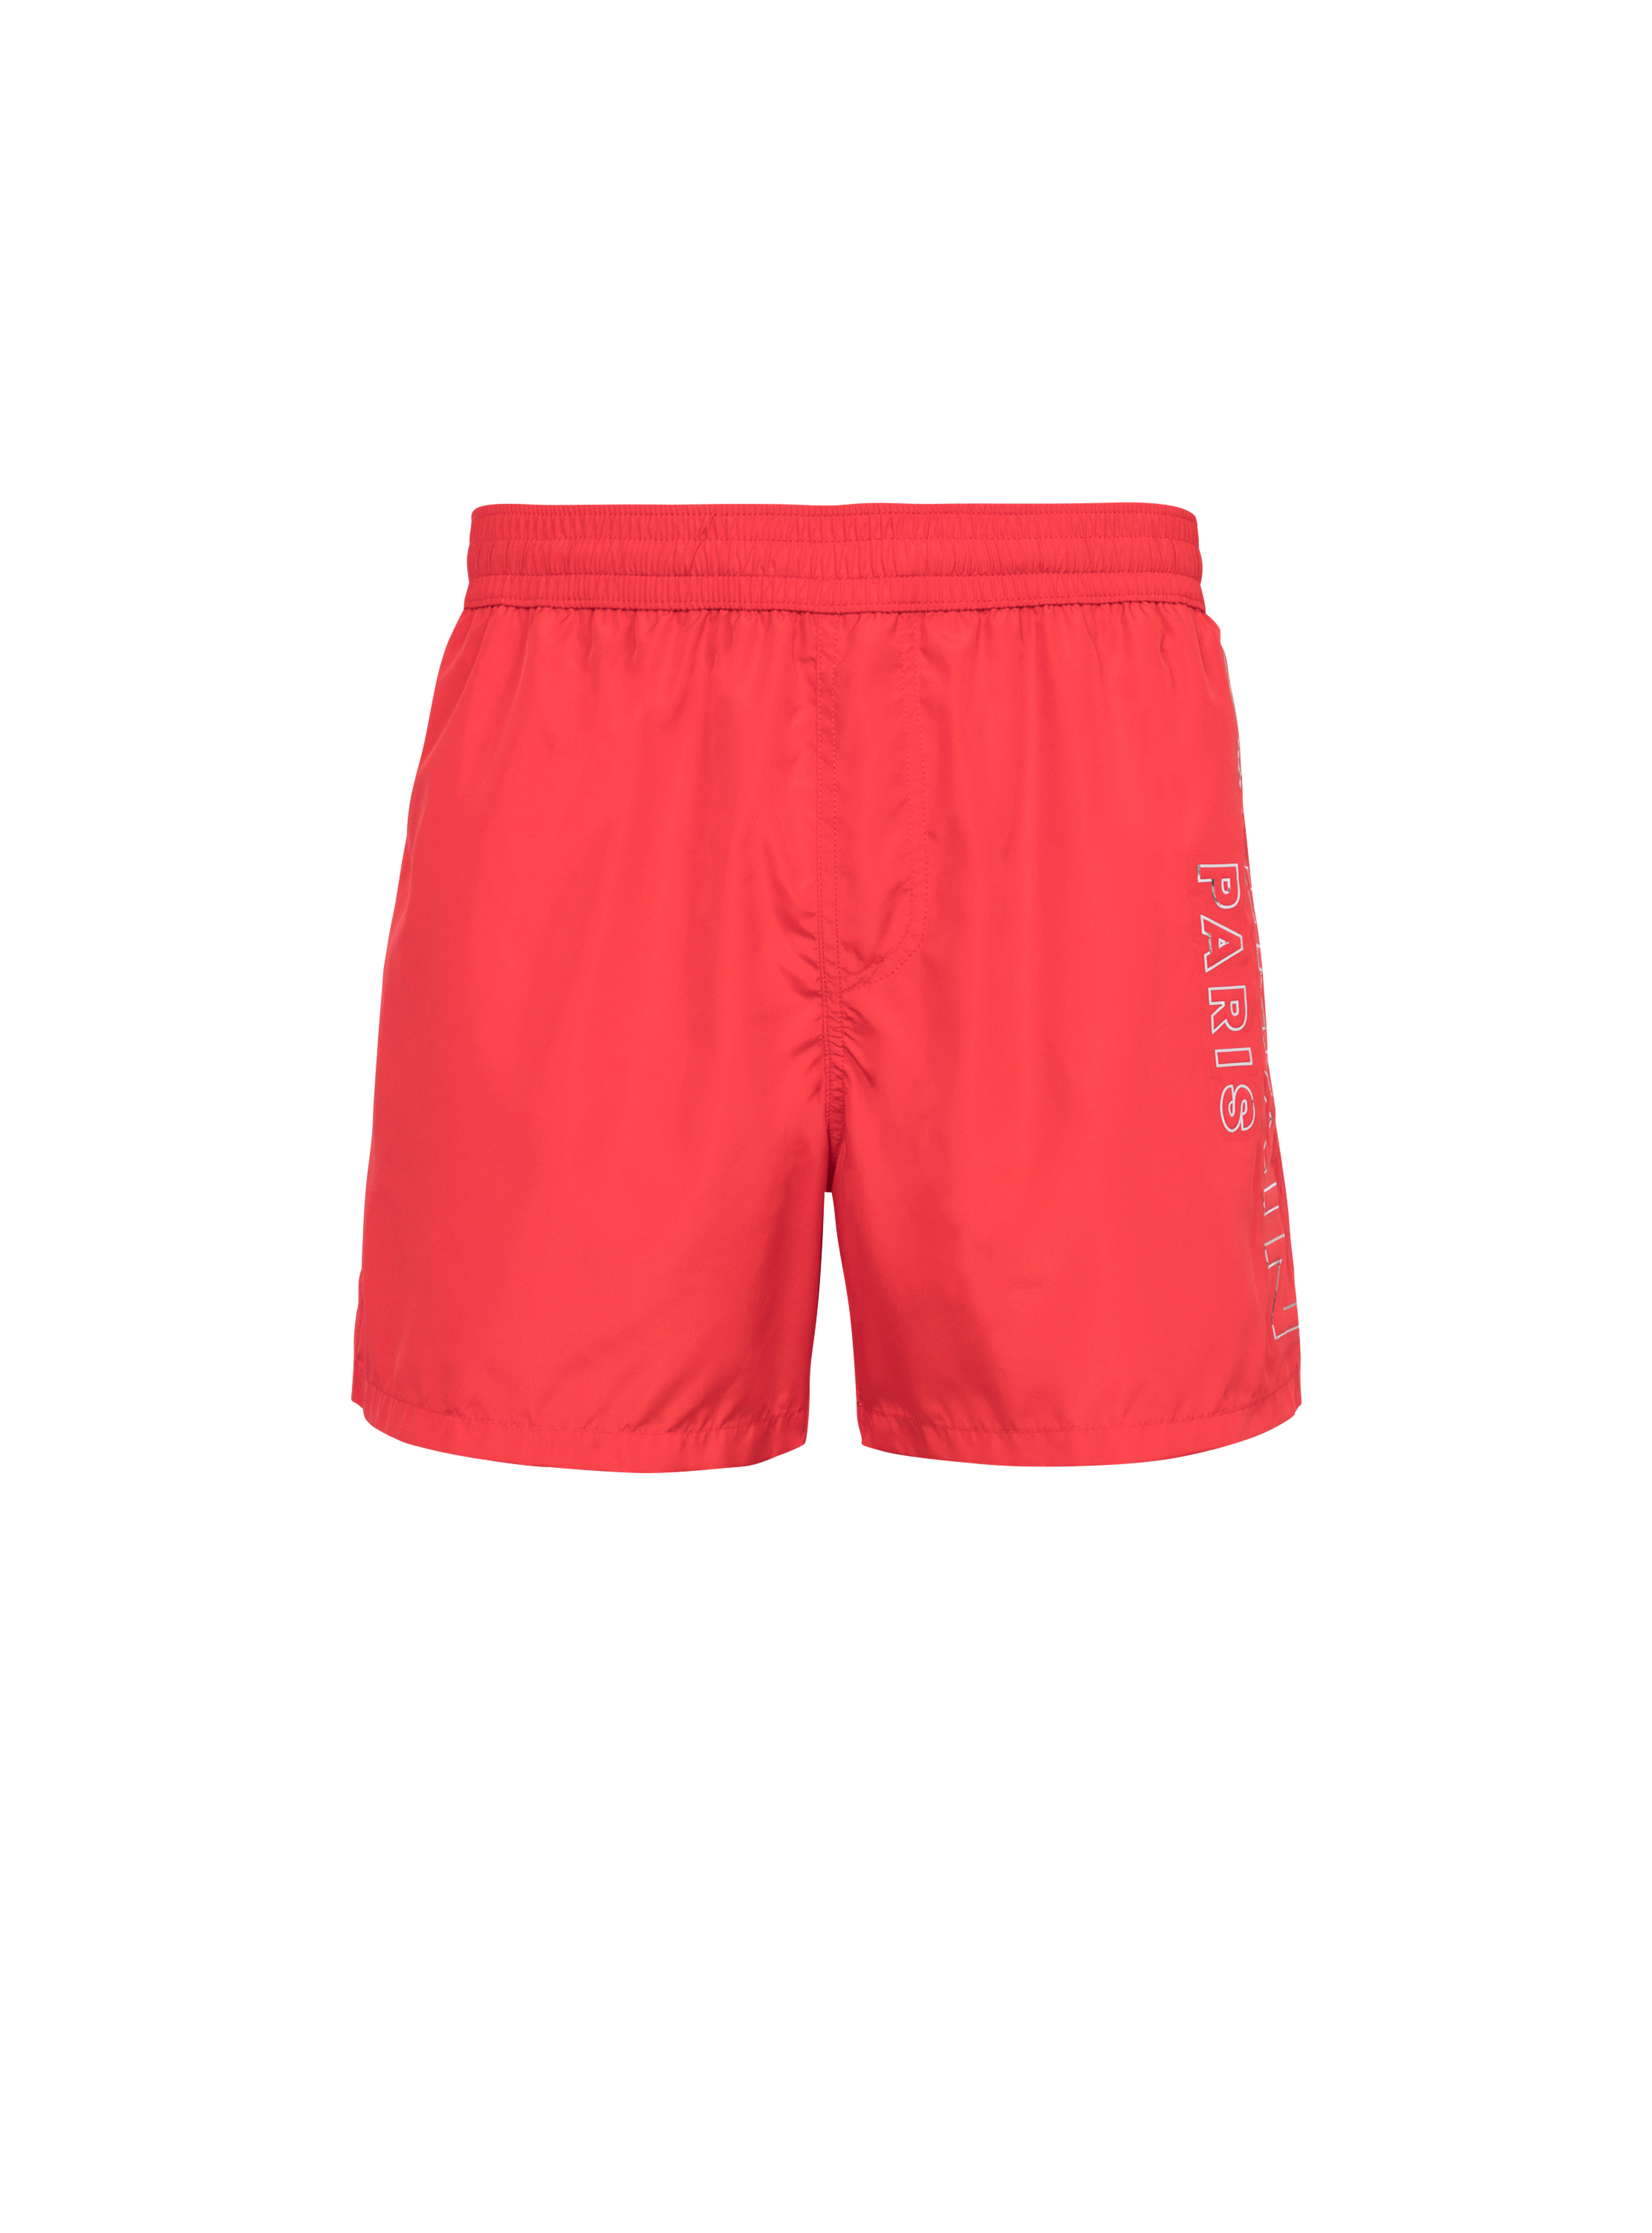 Balmain巴尔曼标志泳装短裤, red